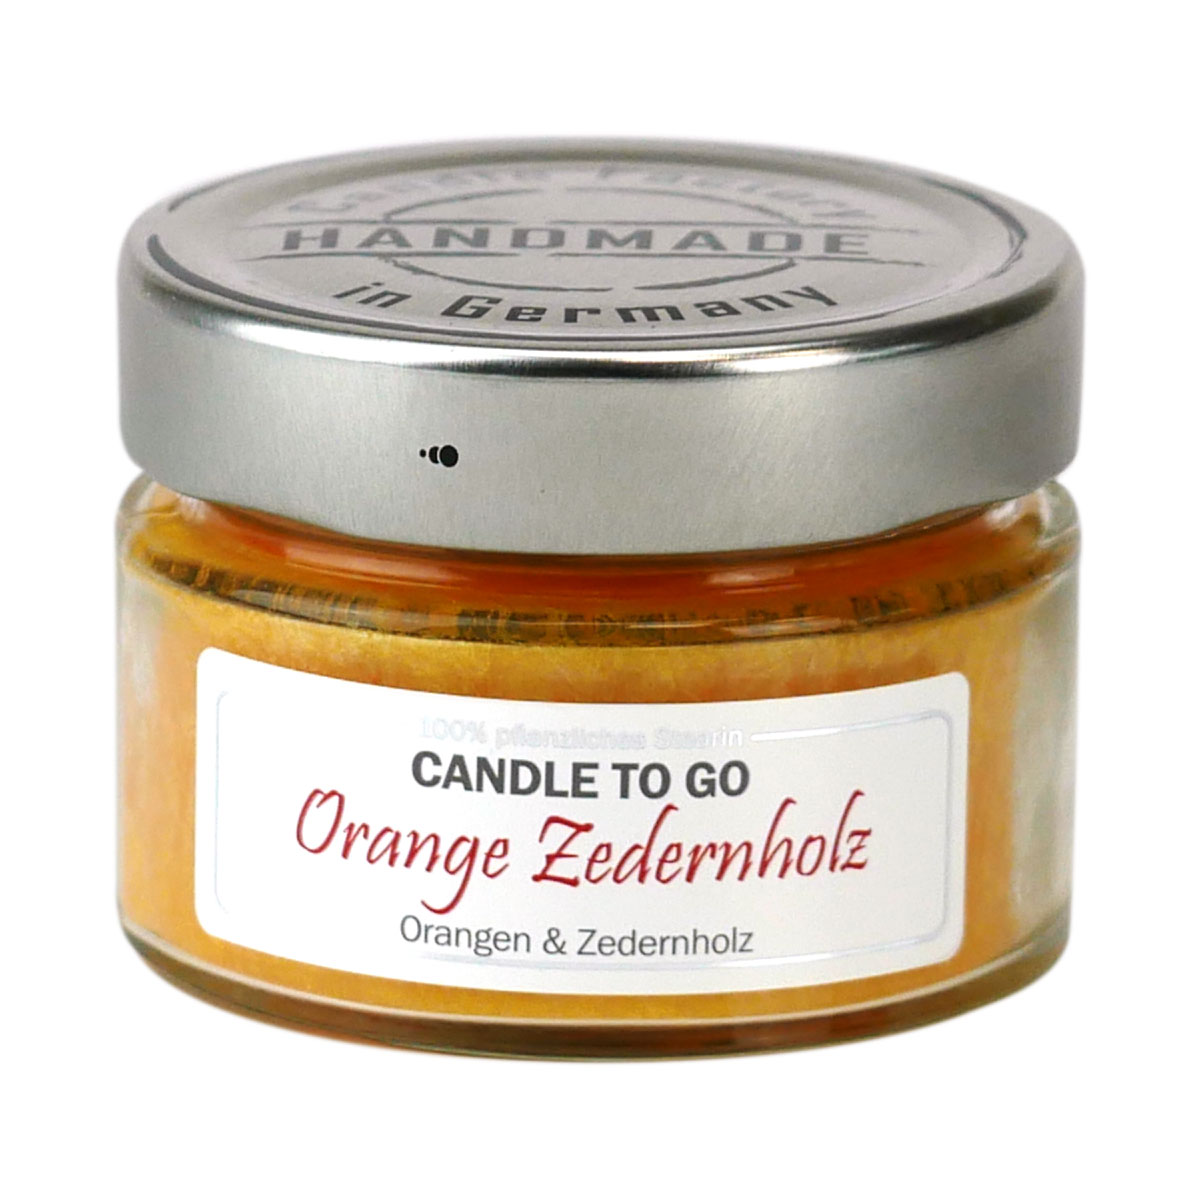 Orange Zedernholz - Candle to Go Duftkerze von Candle Factory